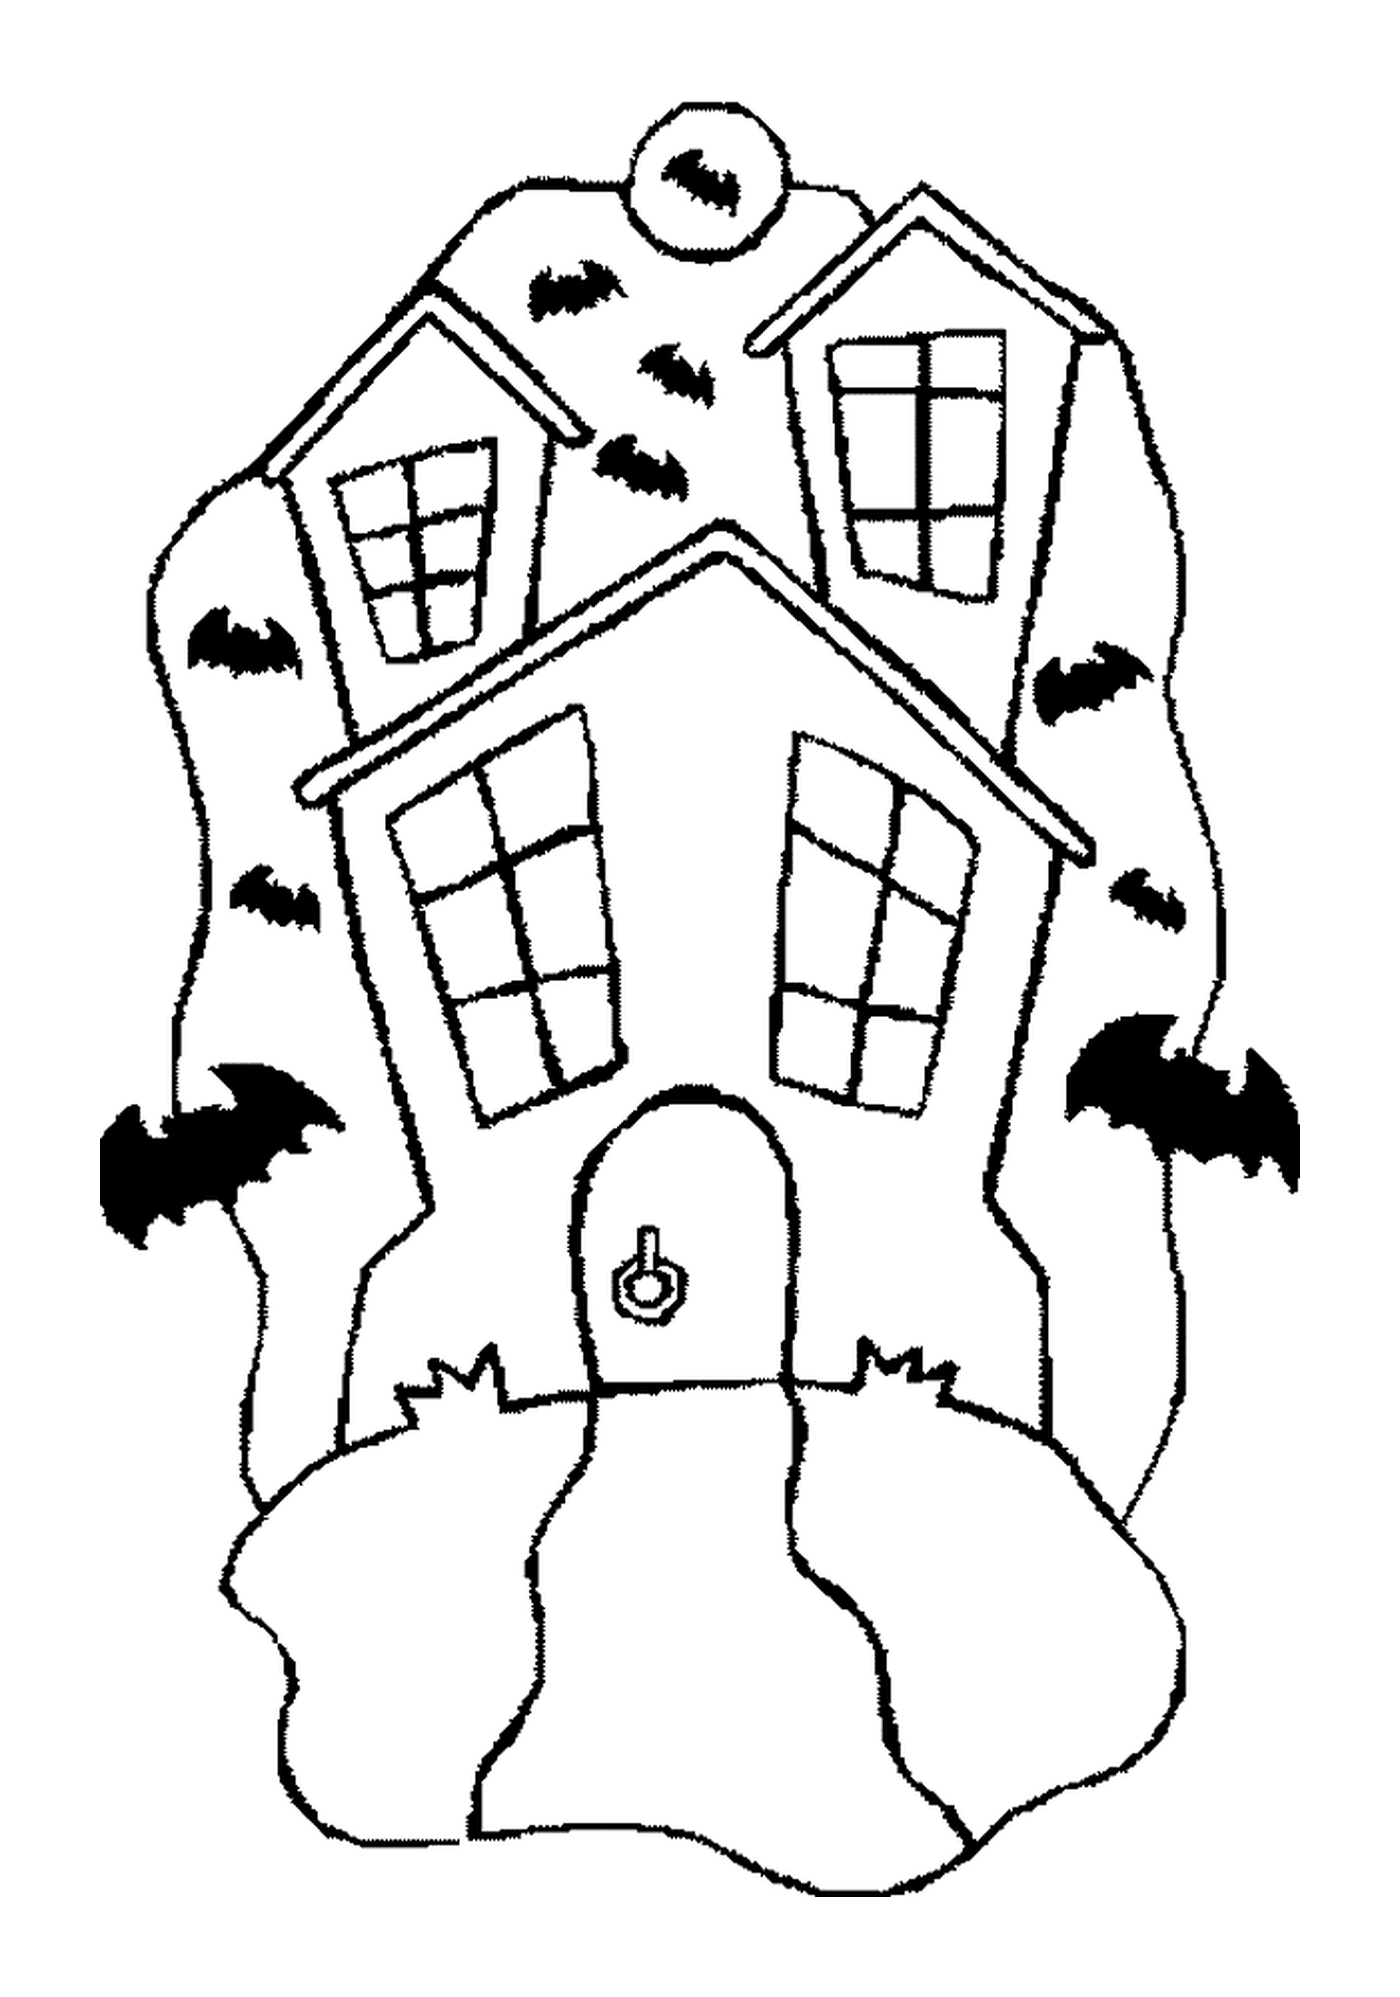  Una casa infestata dai pipistrelli 